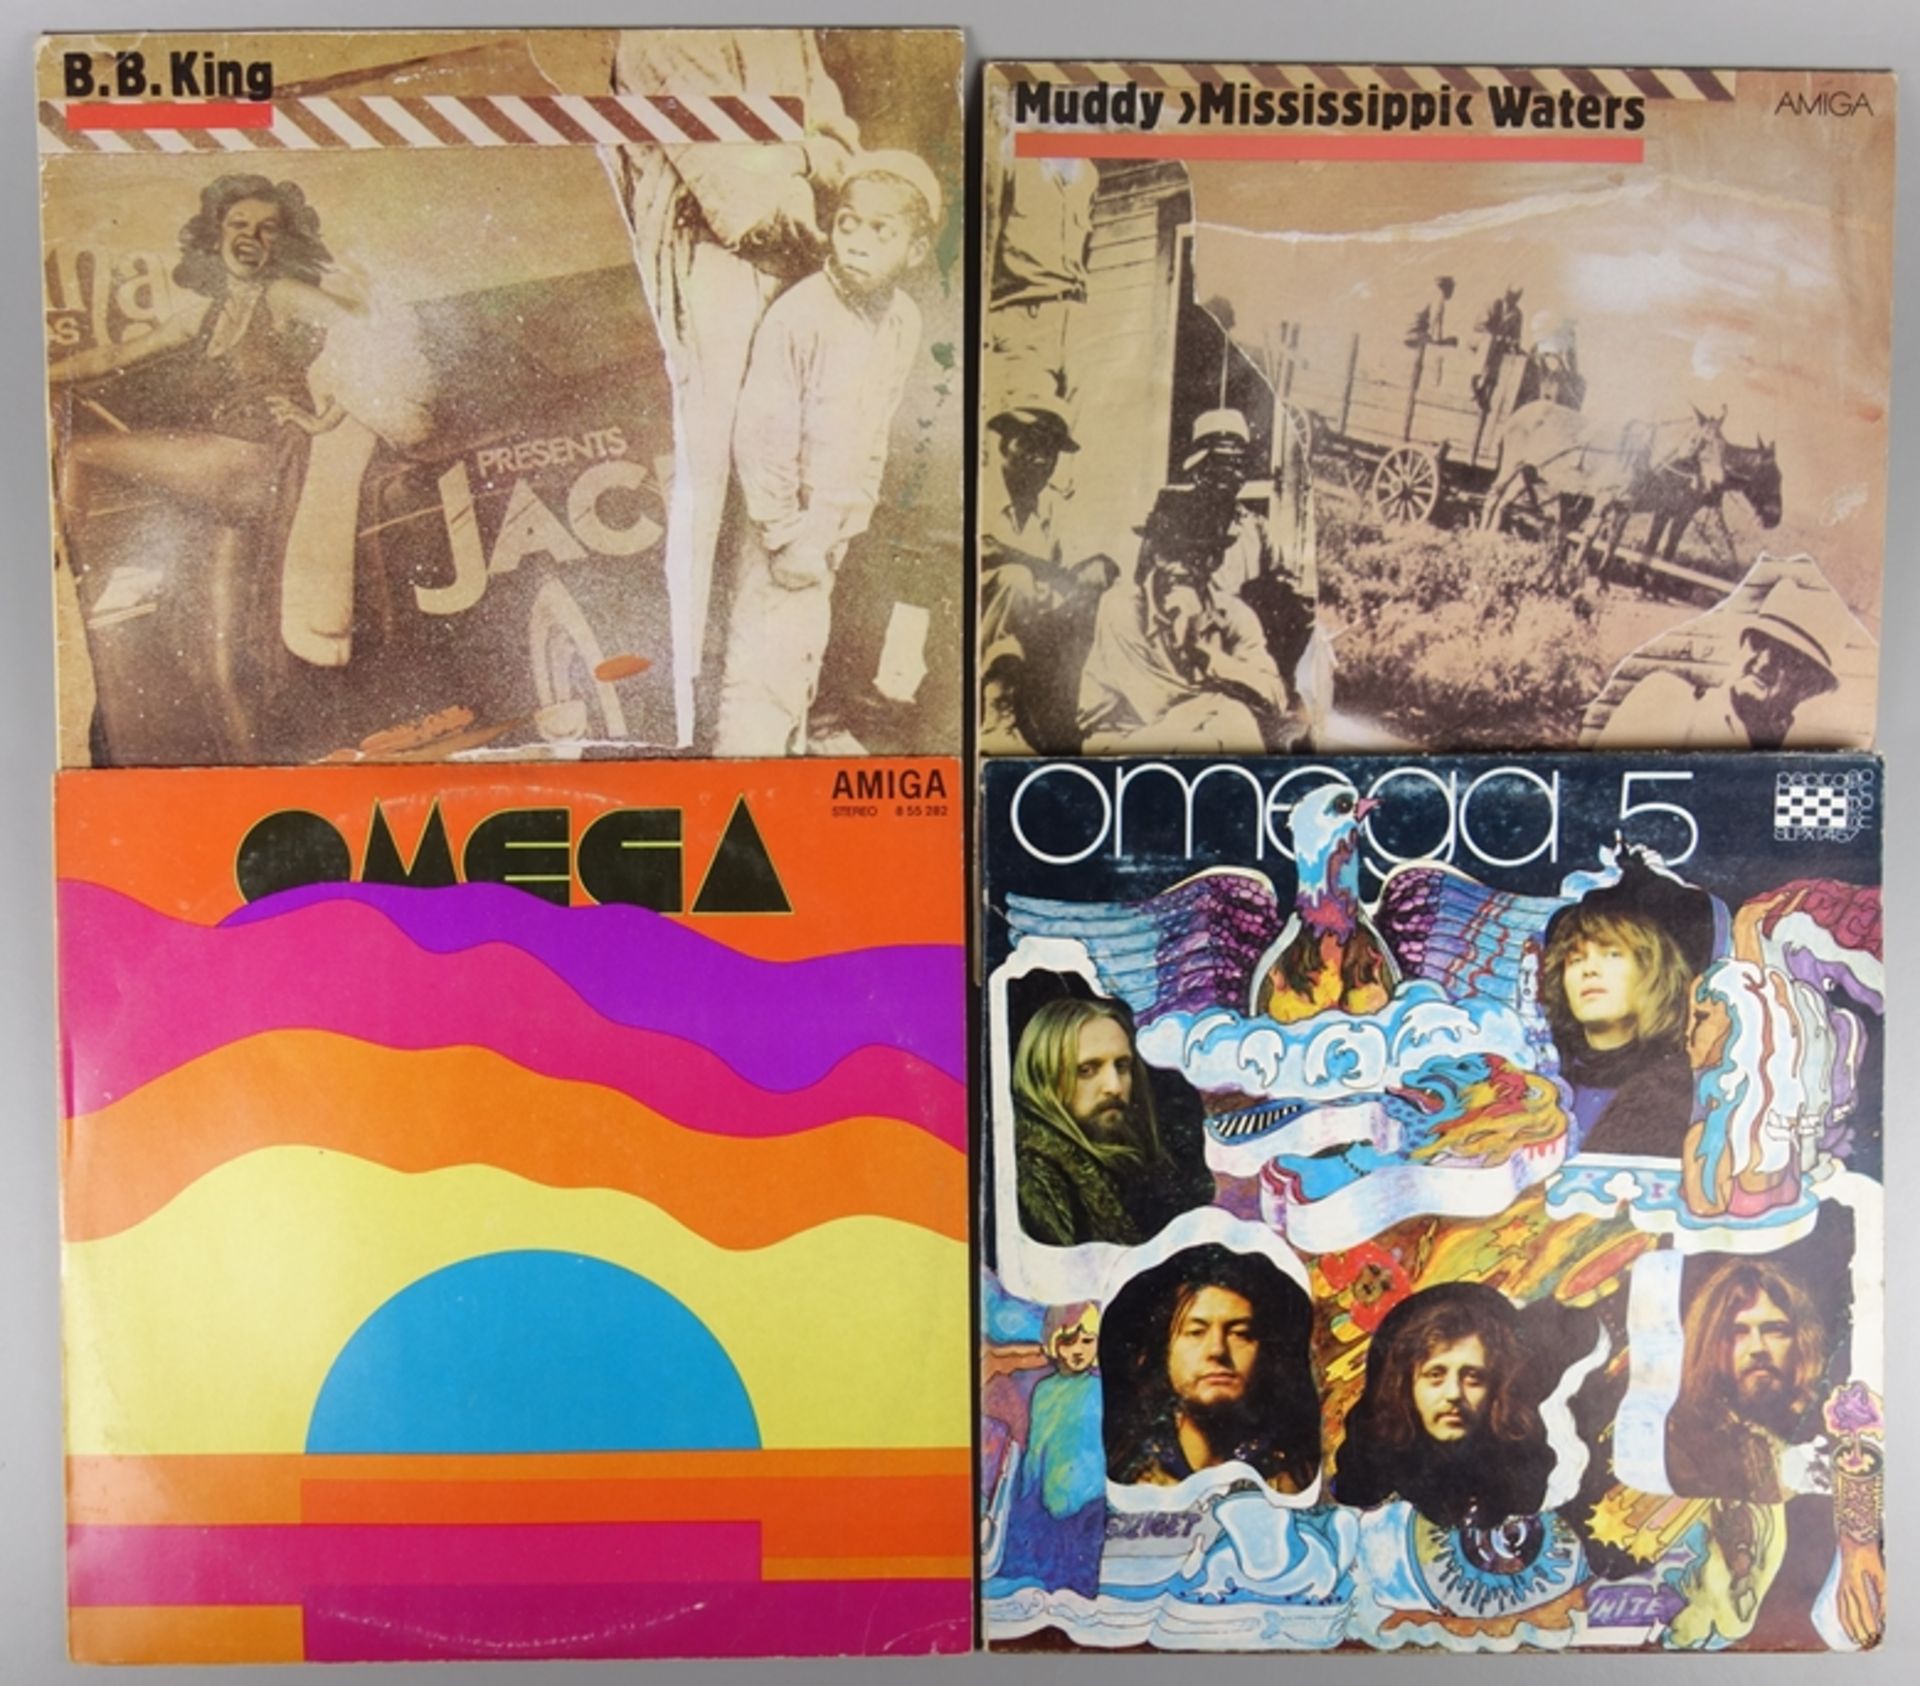 25 LP´s, überwiegend 1970er Jahre, u.a. OMEGA, Muddy Waters, Uschi Brüning, Ste - Image 2 of 7